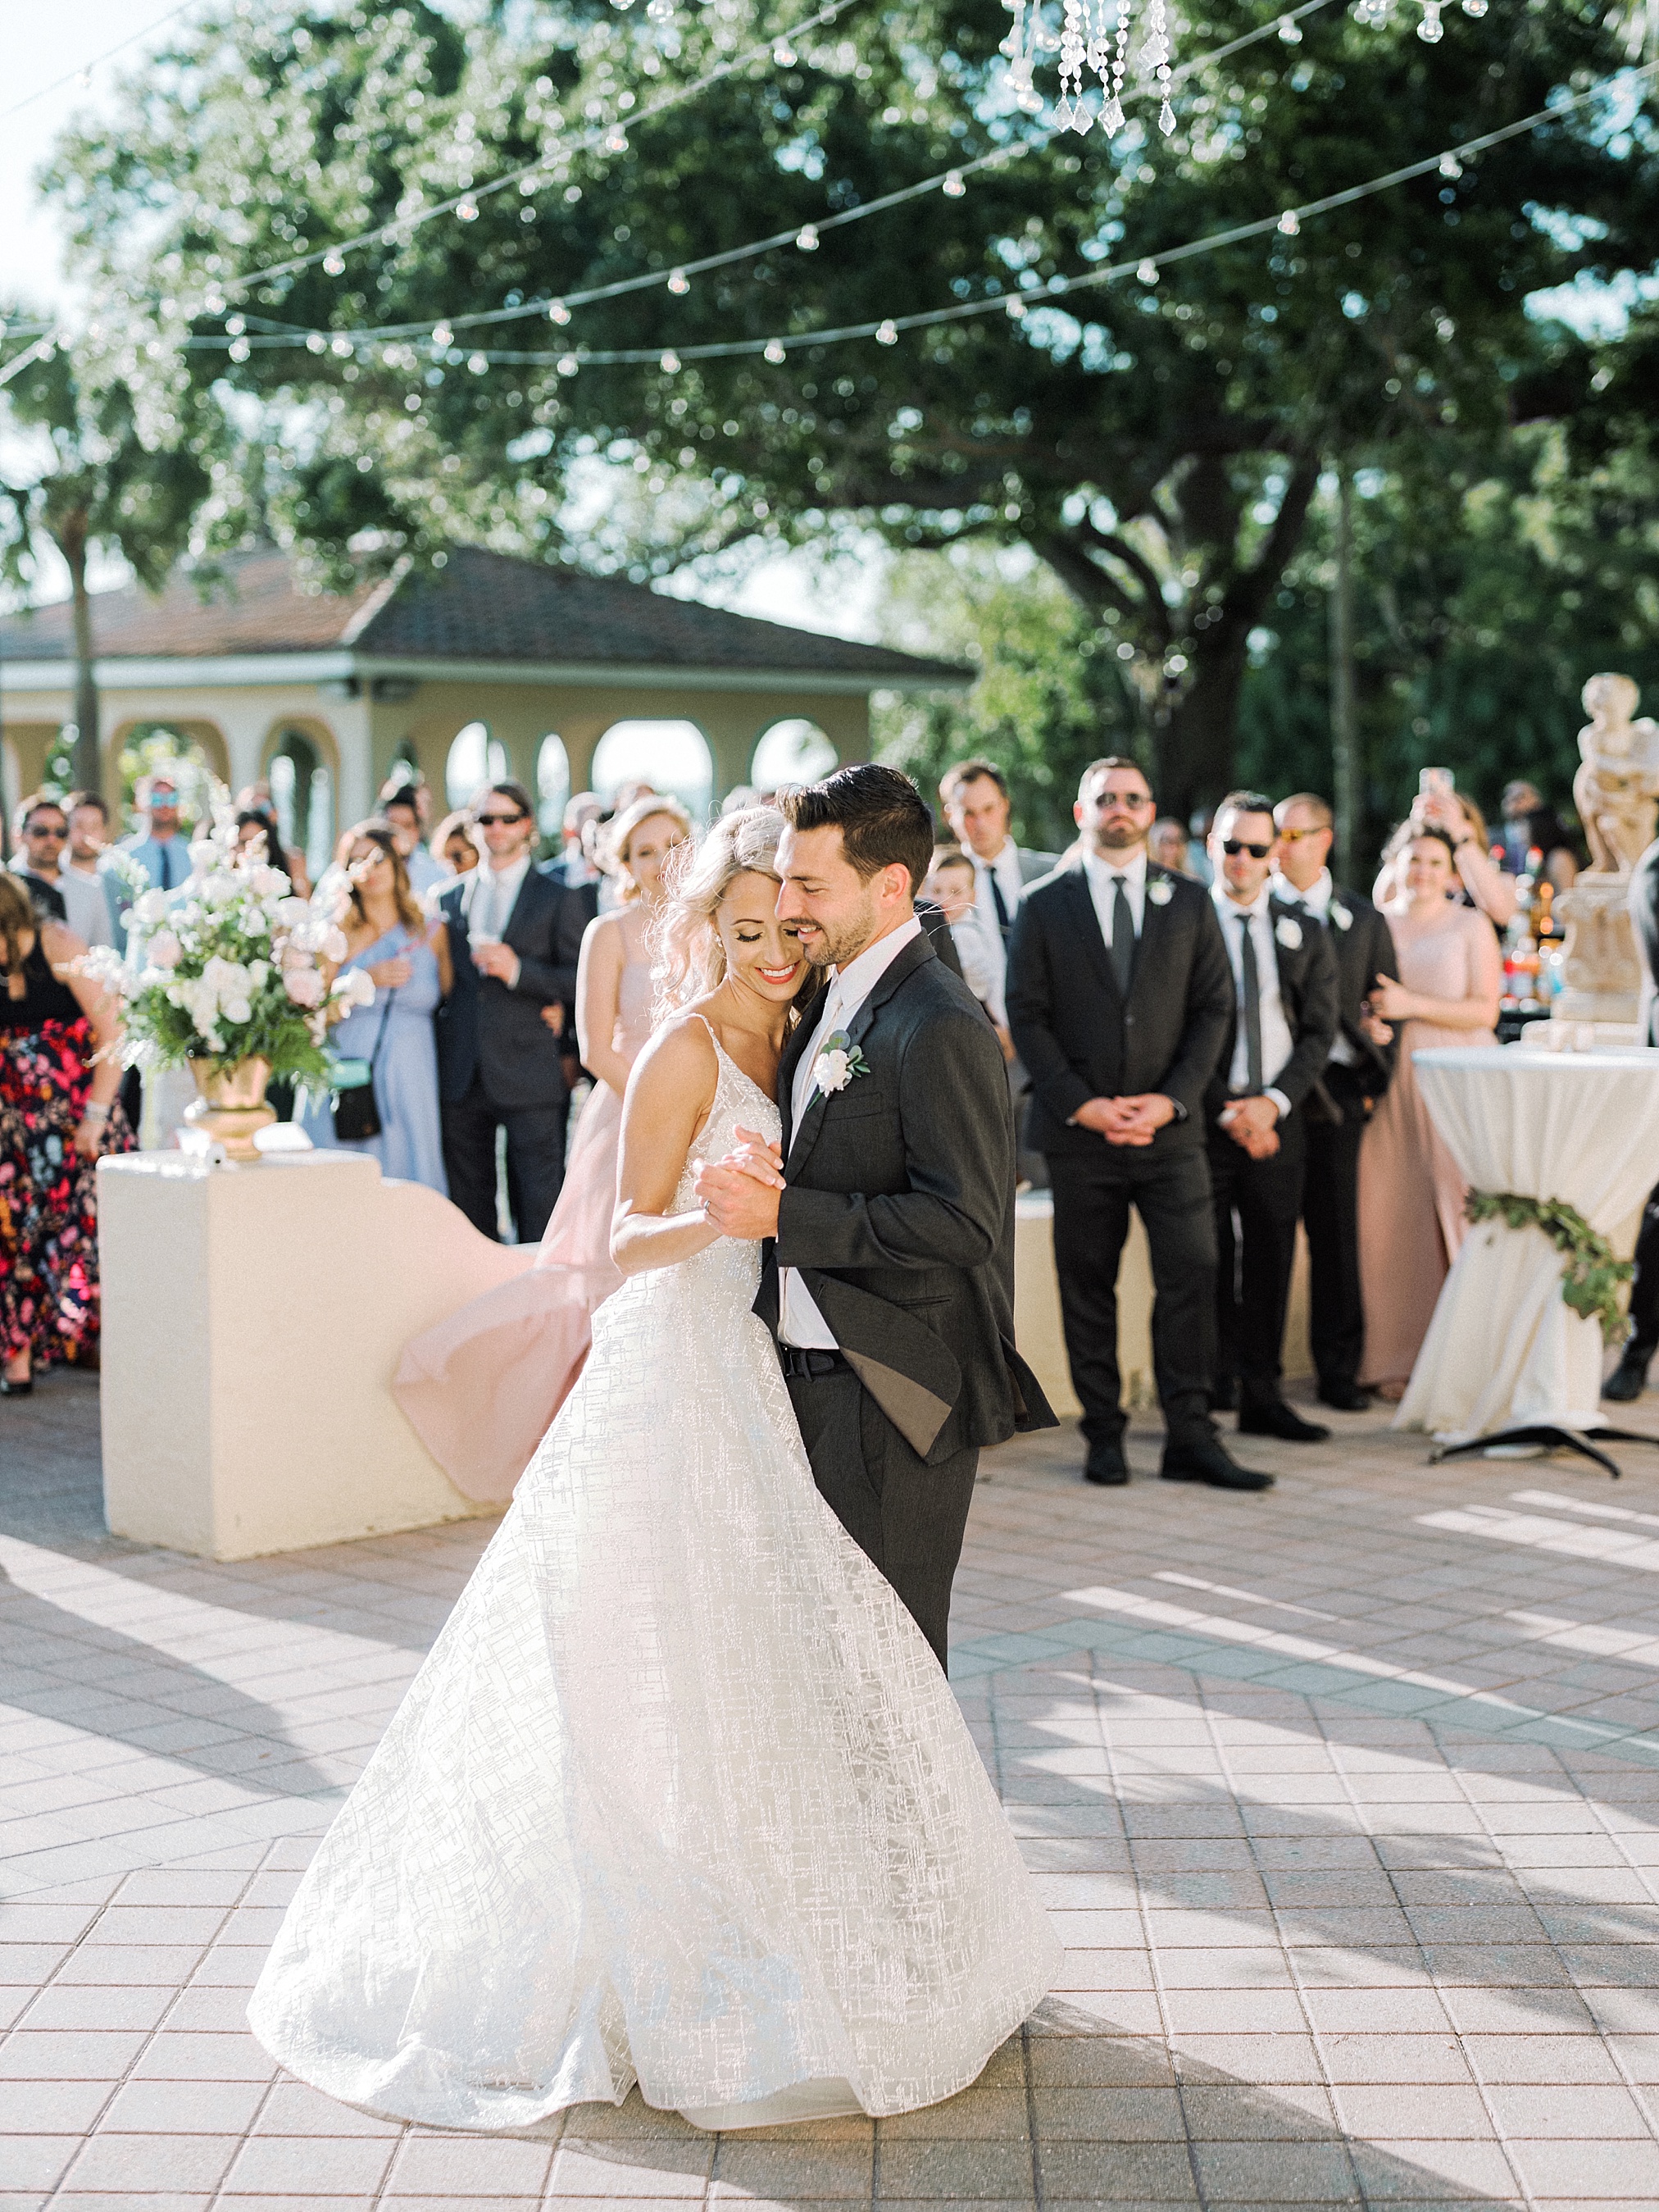 Powel Crosley Estate Wedding, Sarasota Wedding Venue, Sarasota Wedding Photographers, Florida Fine Art Wedding Photography, Luxury Sarasota Wedding